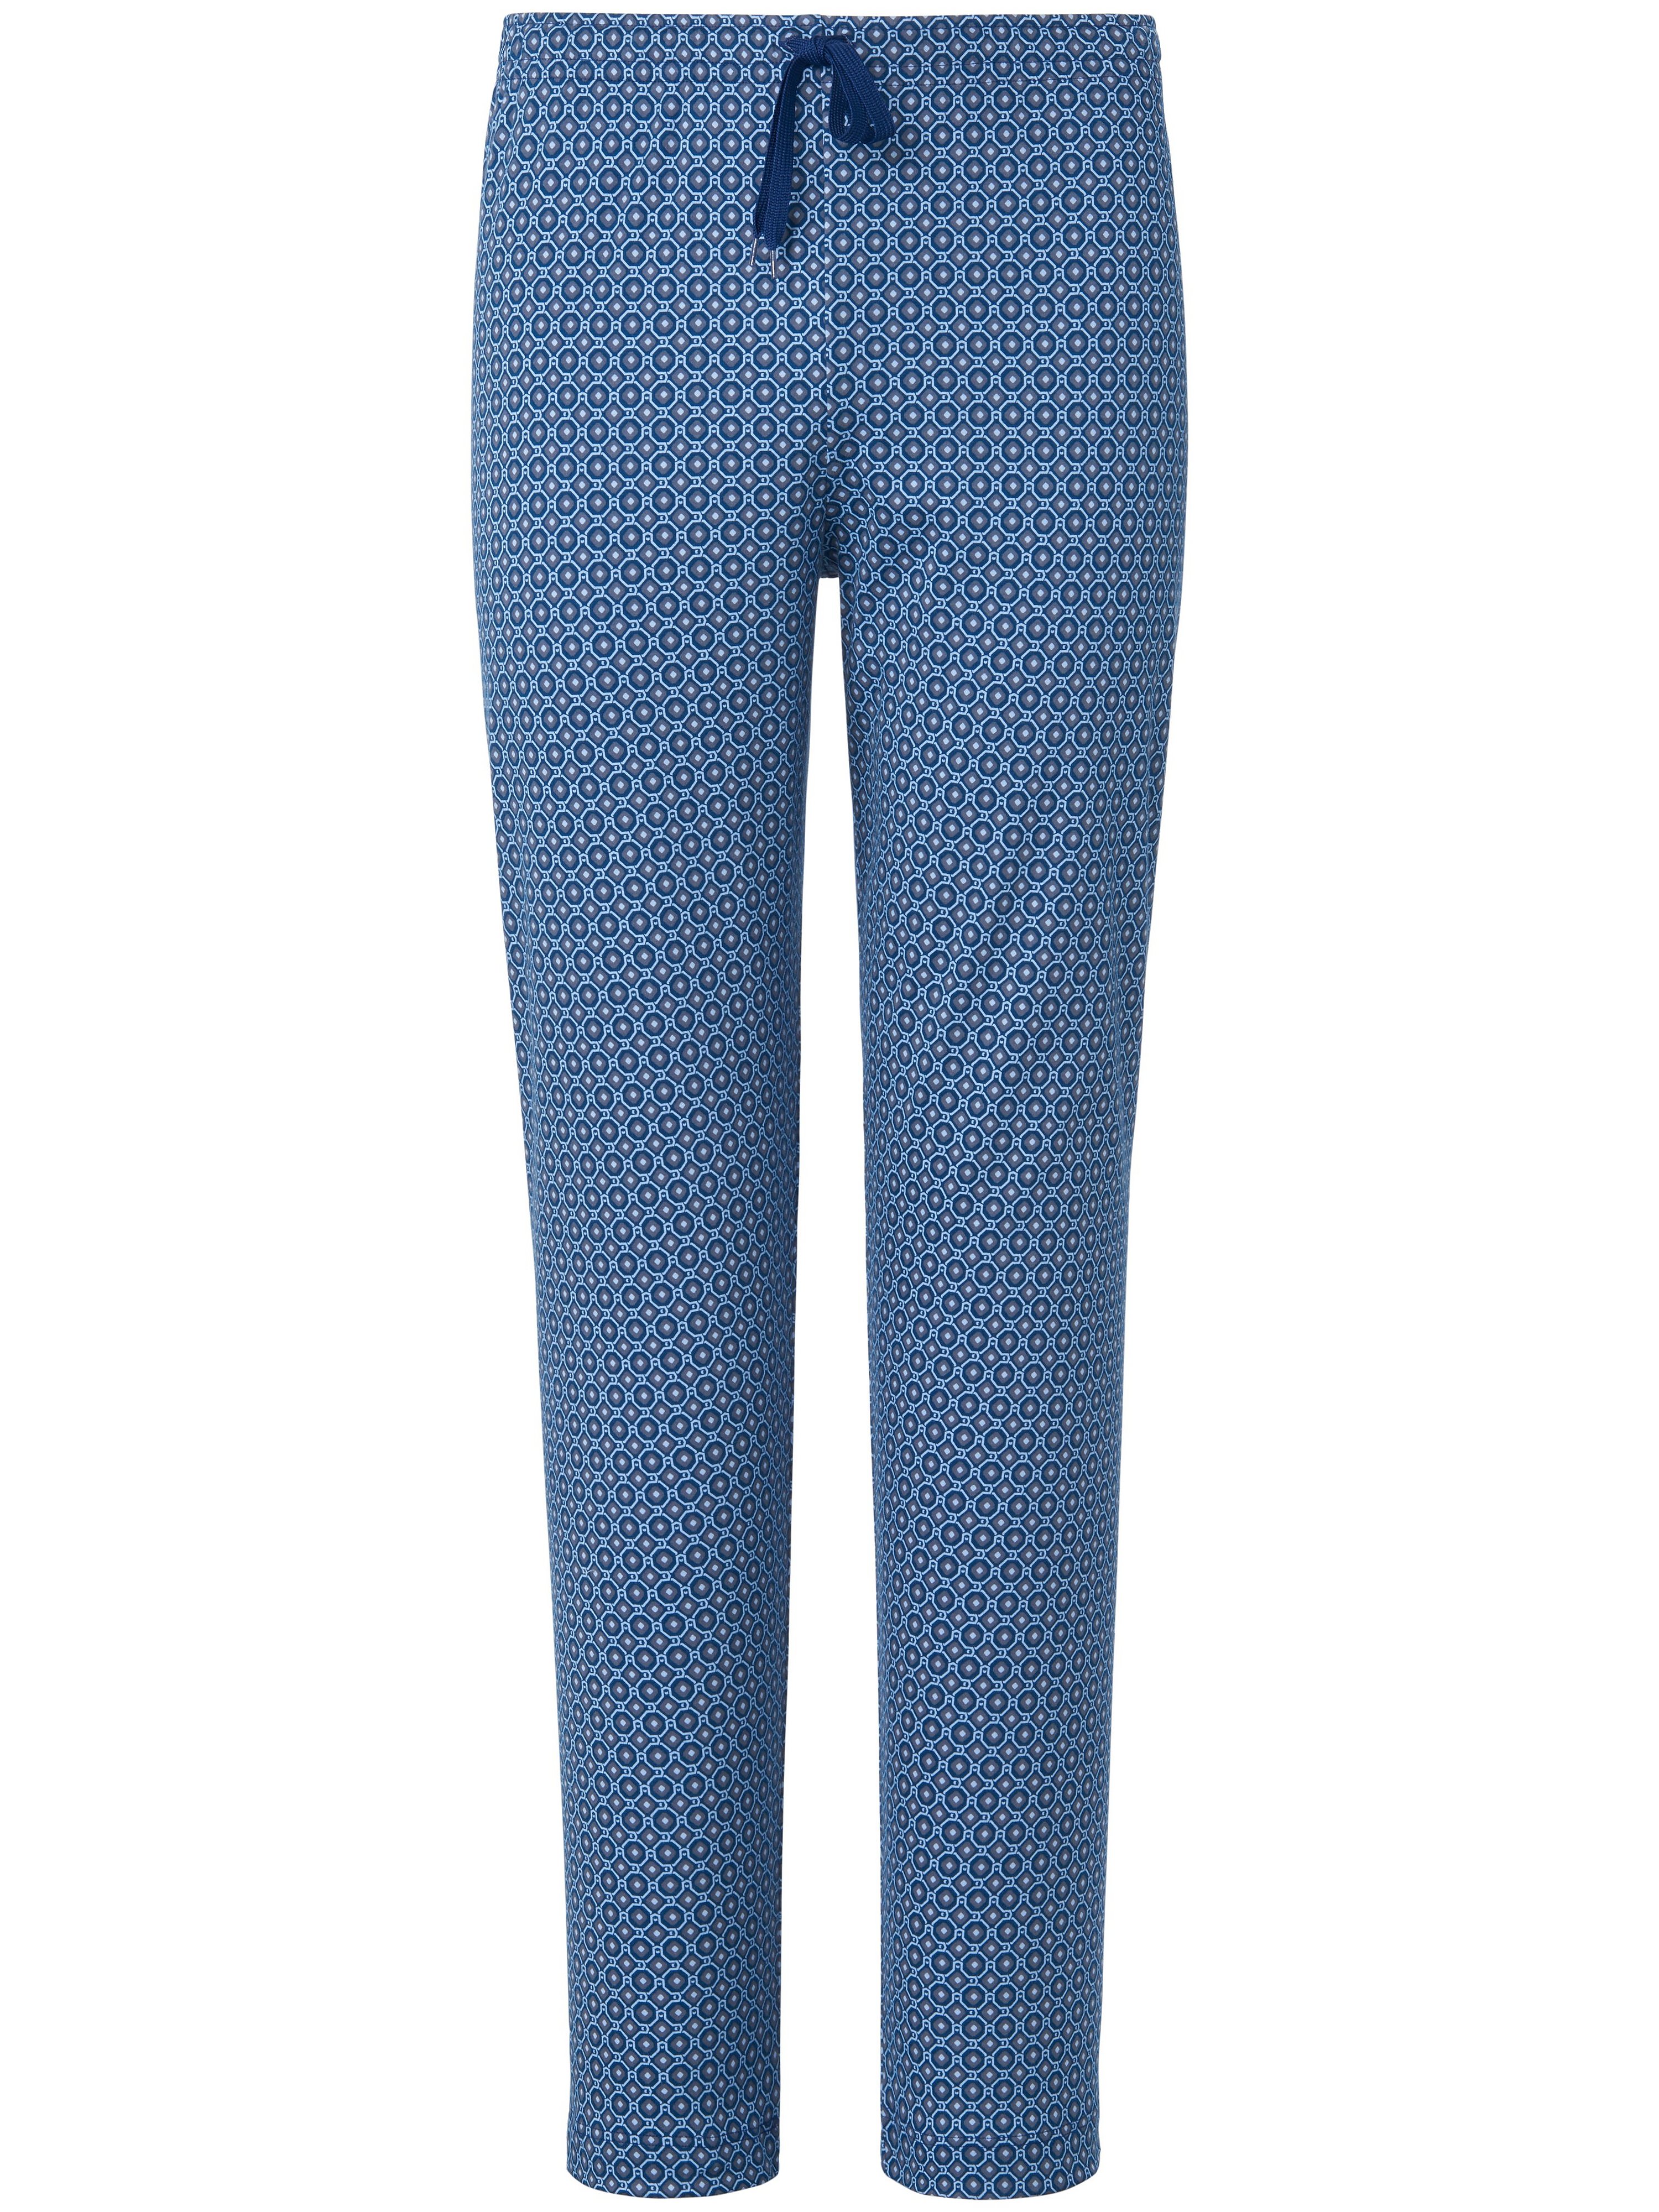 Le pantalon pyjama 100% coton  Mey bleu taille 52